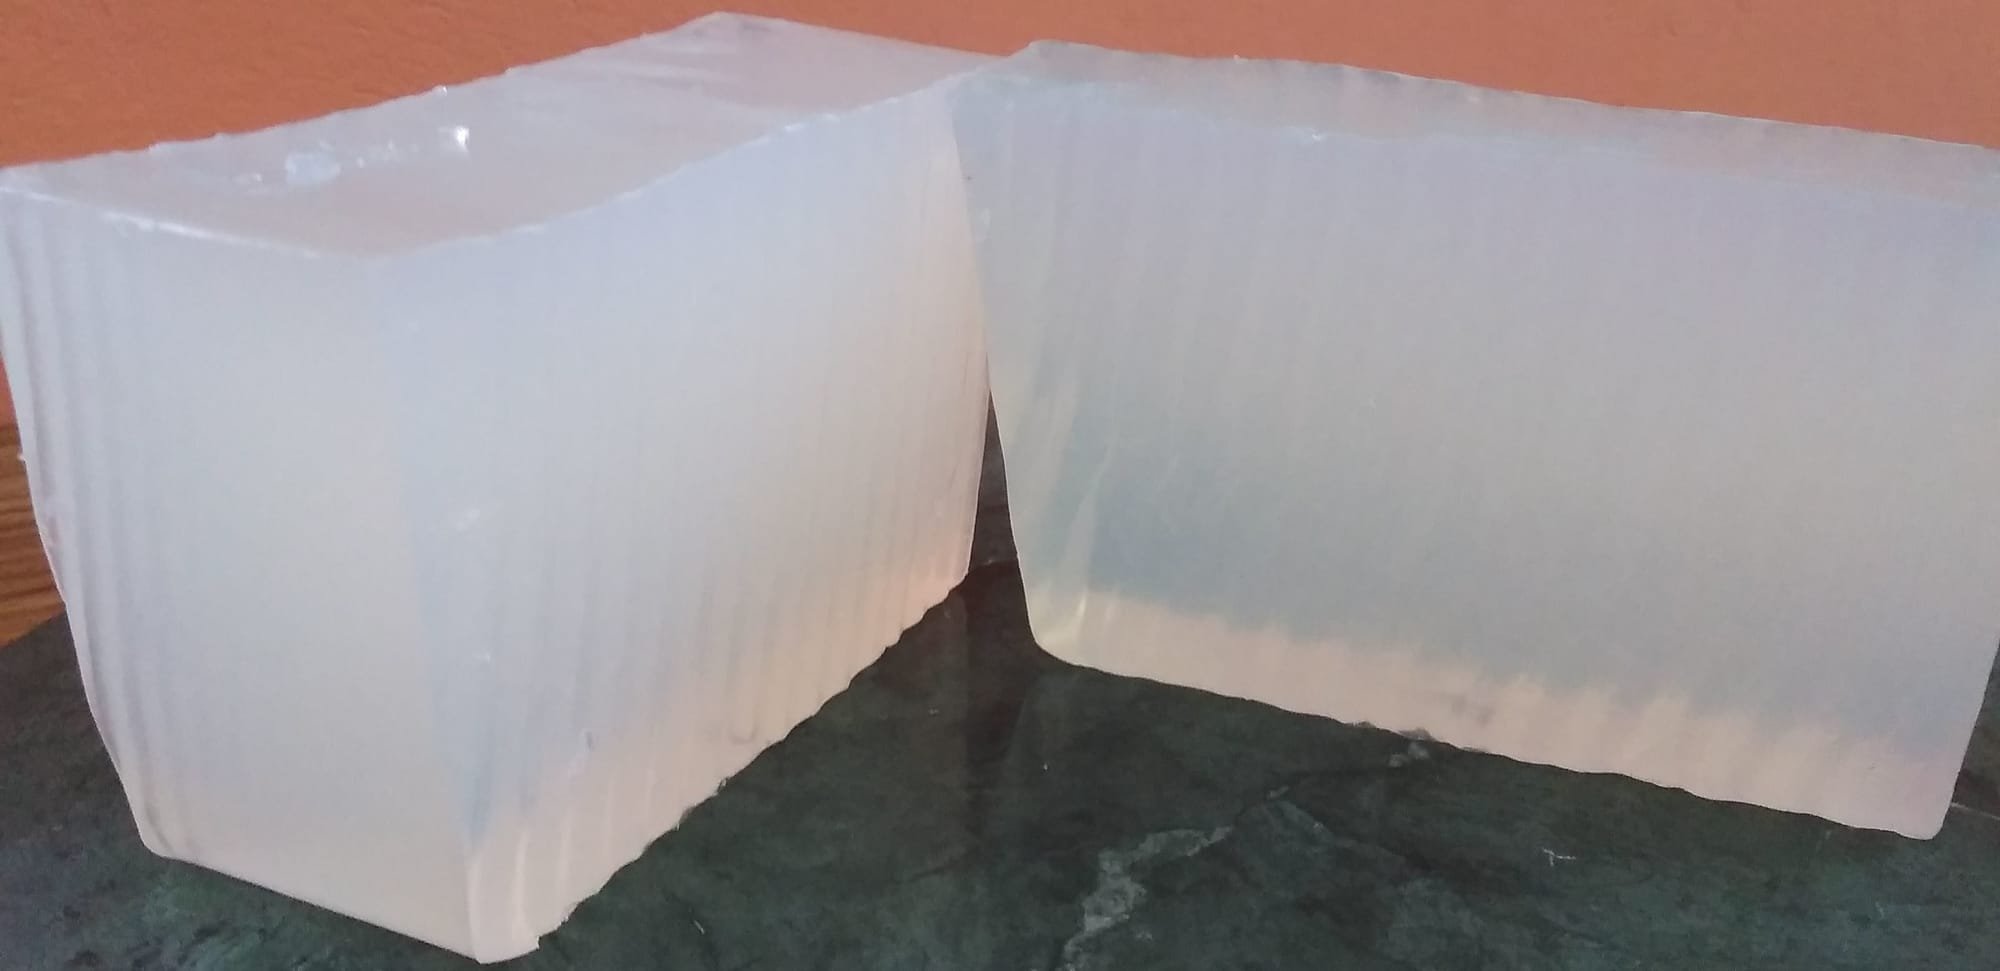 12 Bar Oval Mold – Nurture Soap Making Supplies